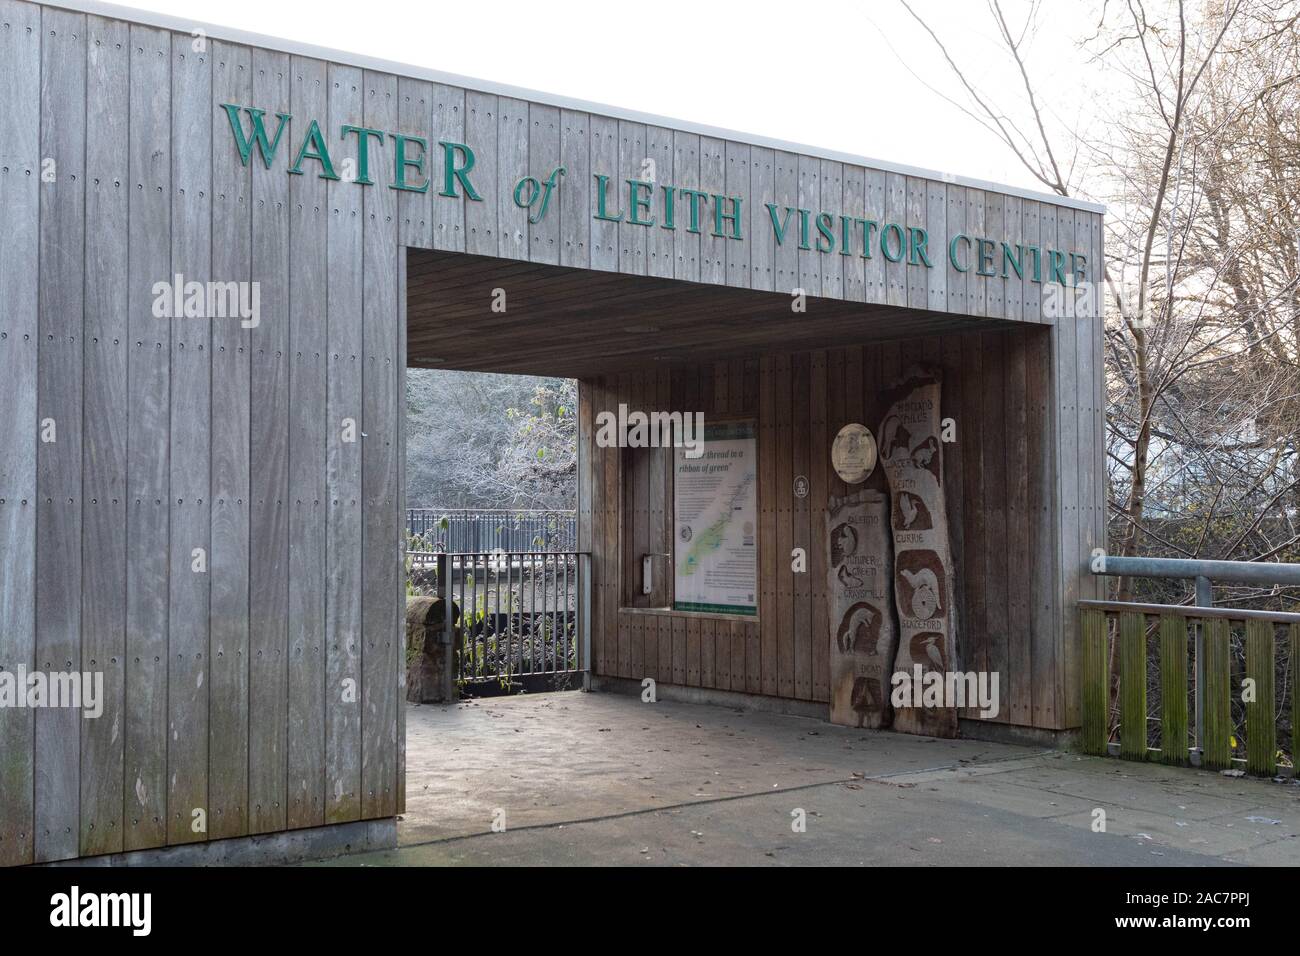 Water of Leith Visitor Centre, Edinburgh, Scotland, UK Stock Photo